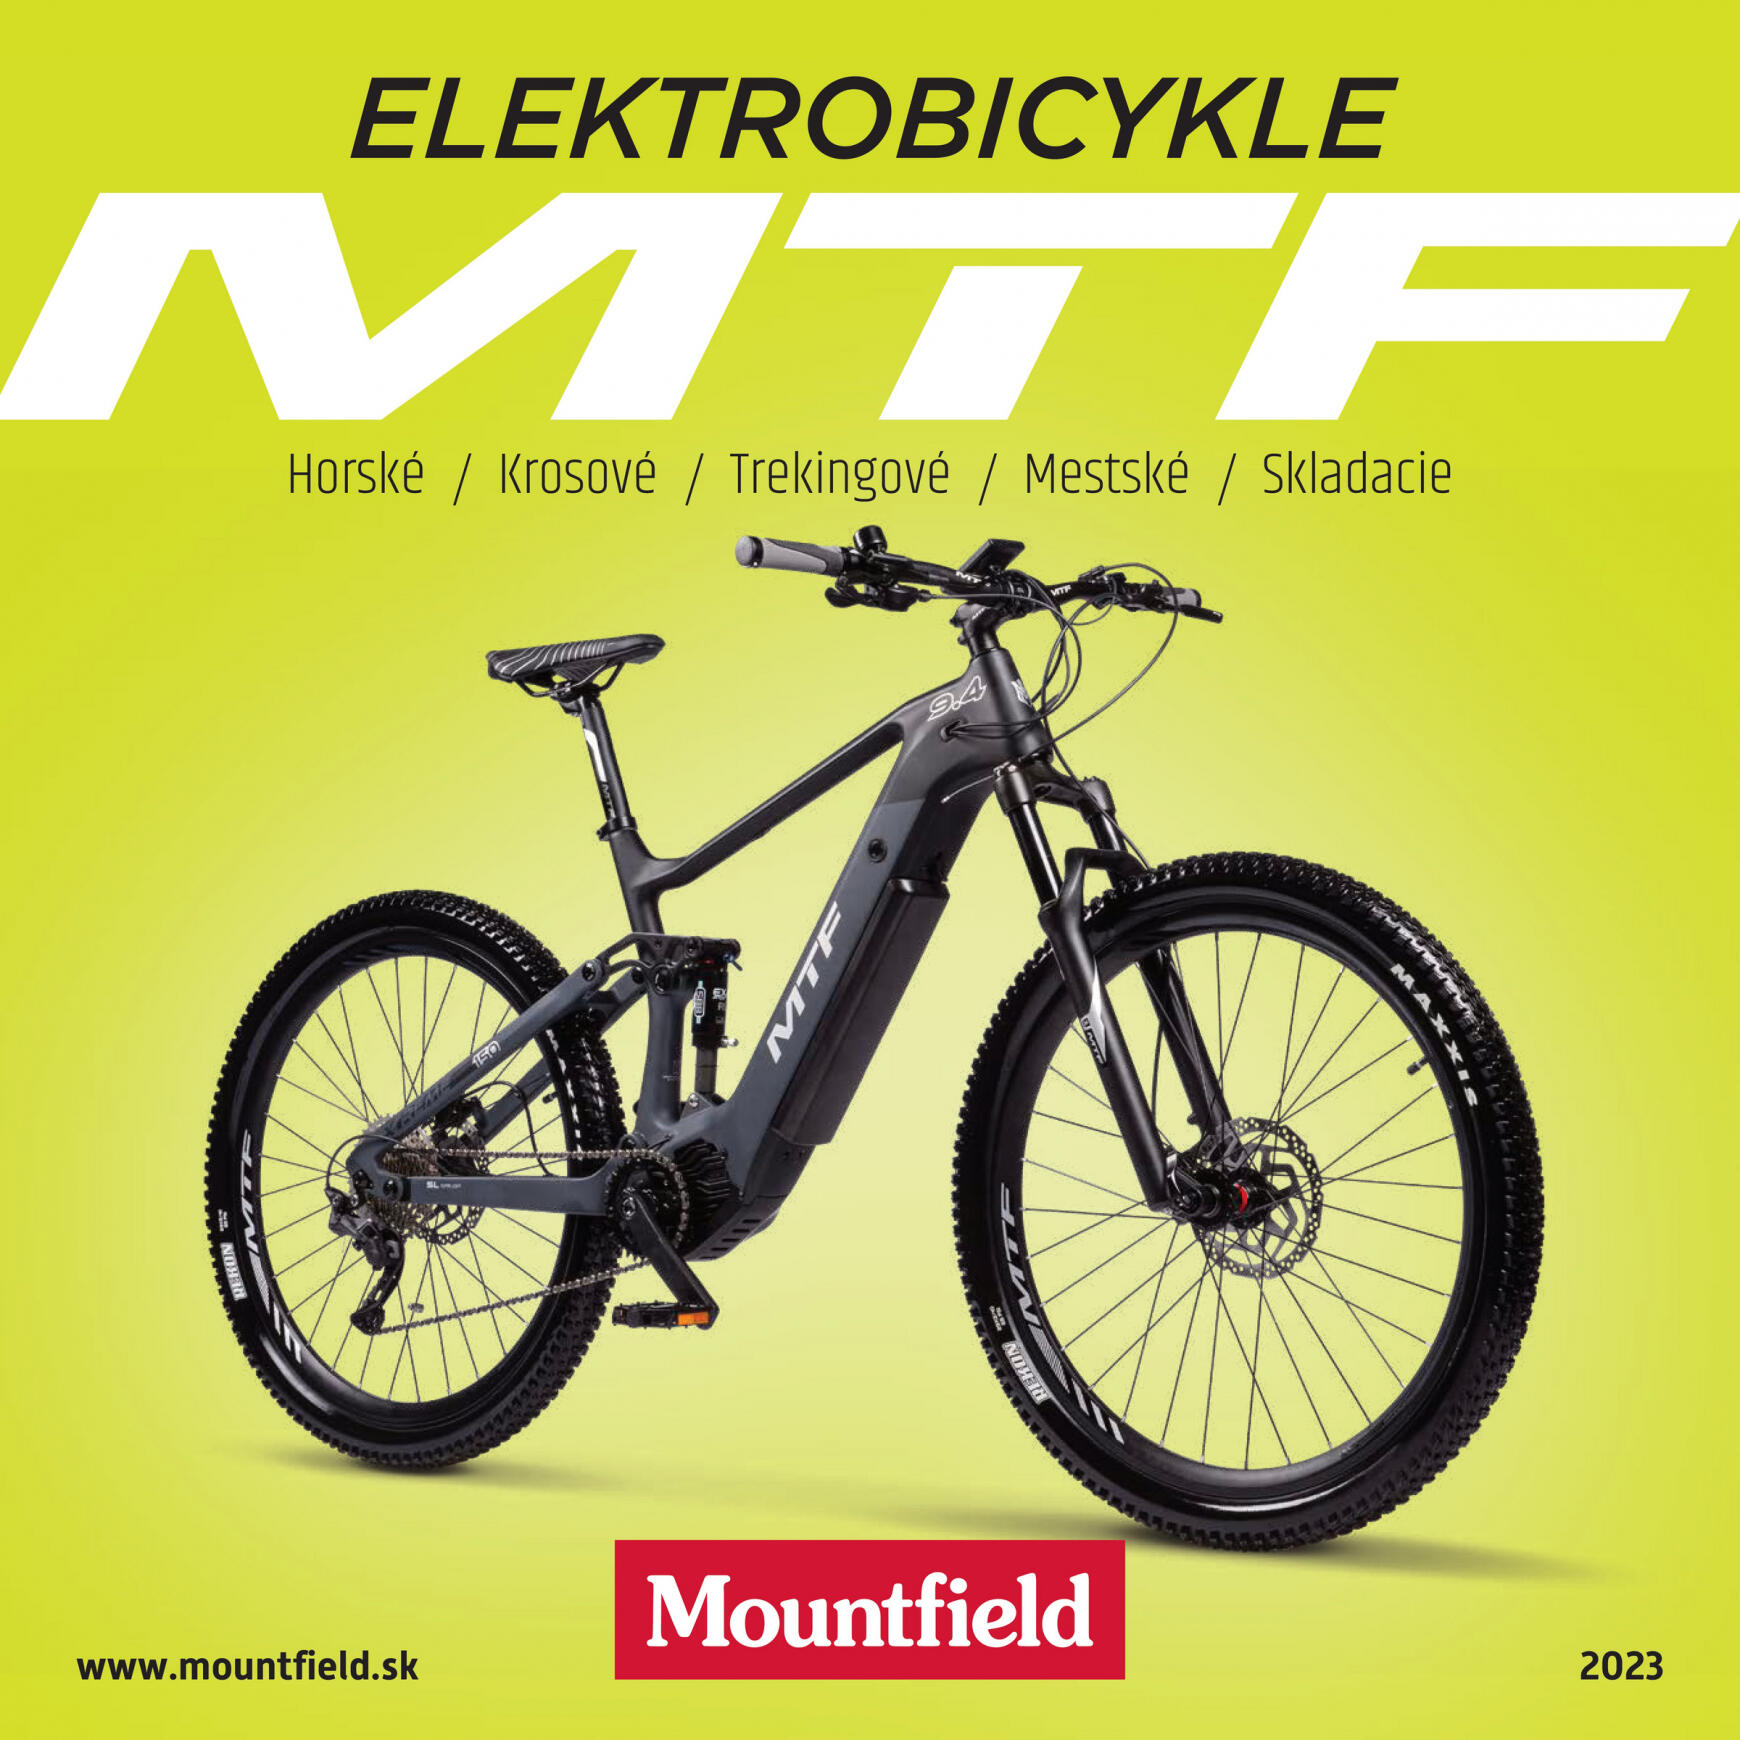 mountfield - Mountfield - Katalóg elektrobicyklov - page: 1